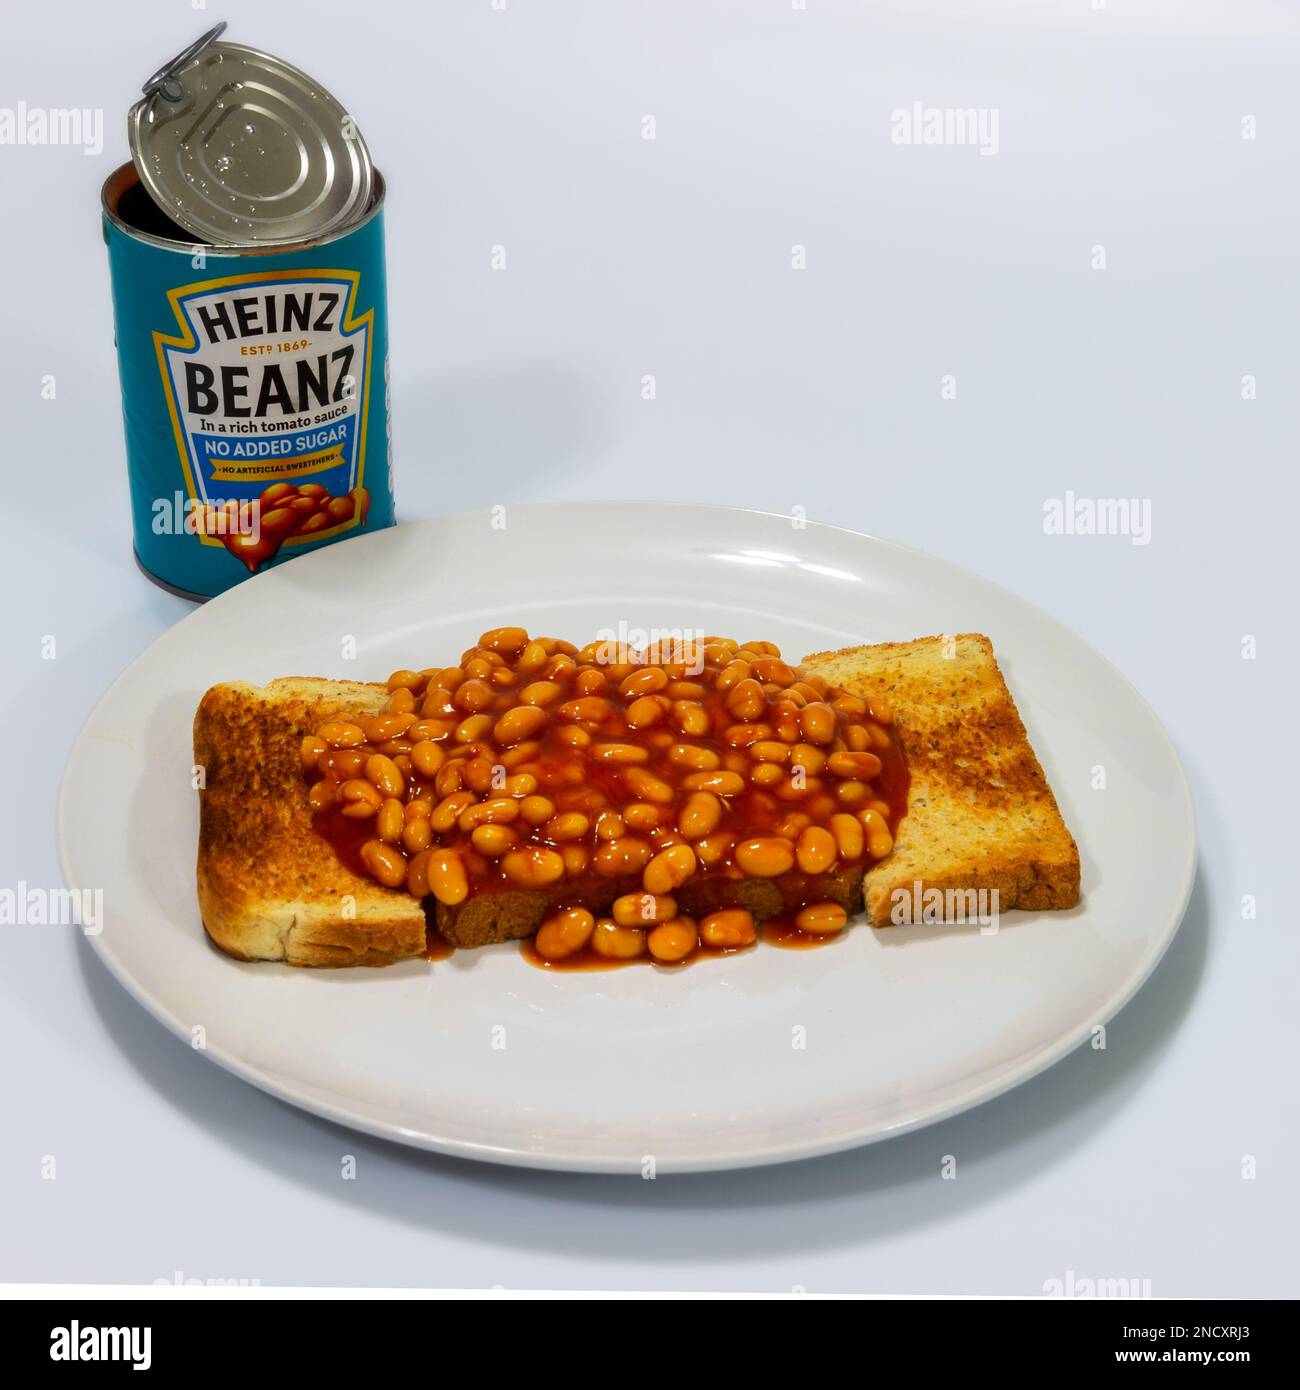 Heinz Beans su pane tostato con la lattina aperta Foto Stock